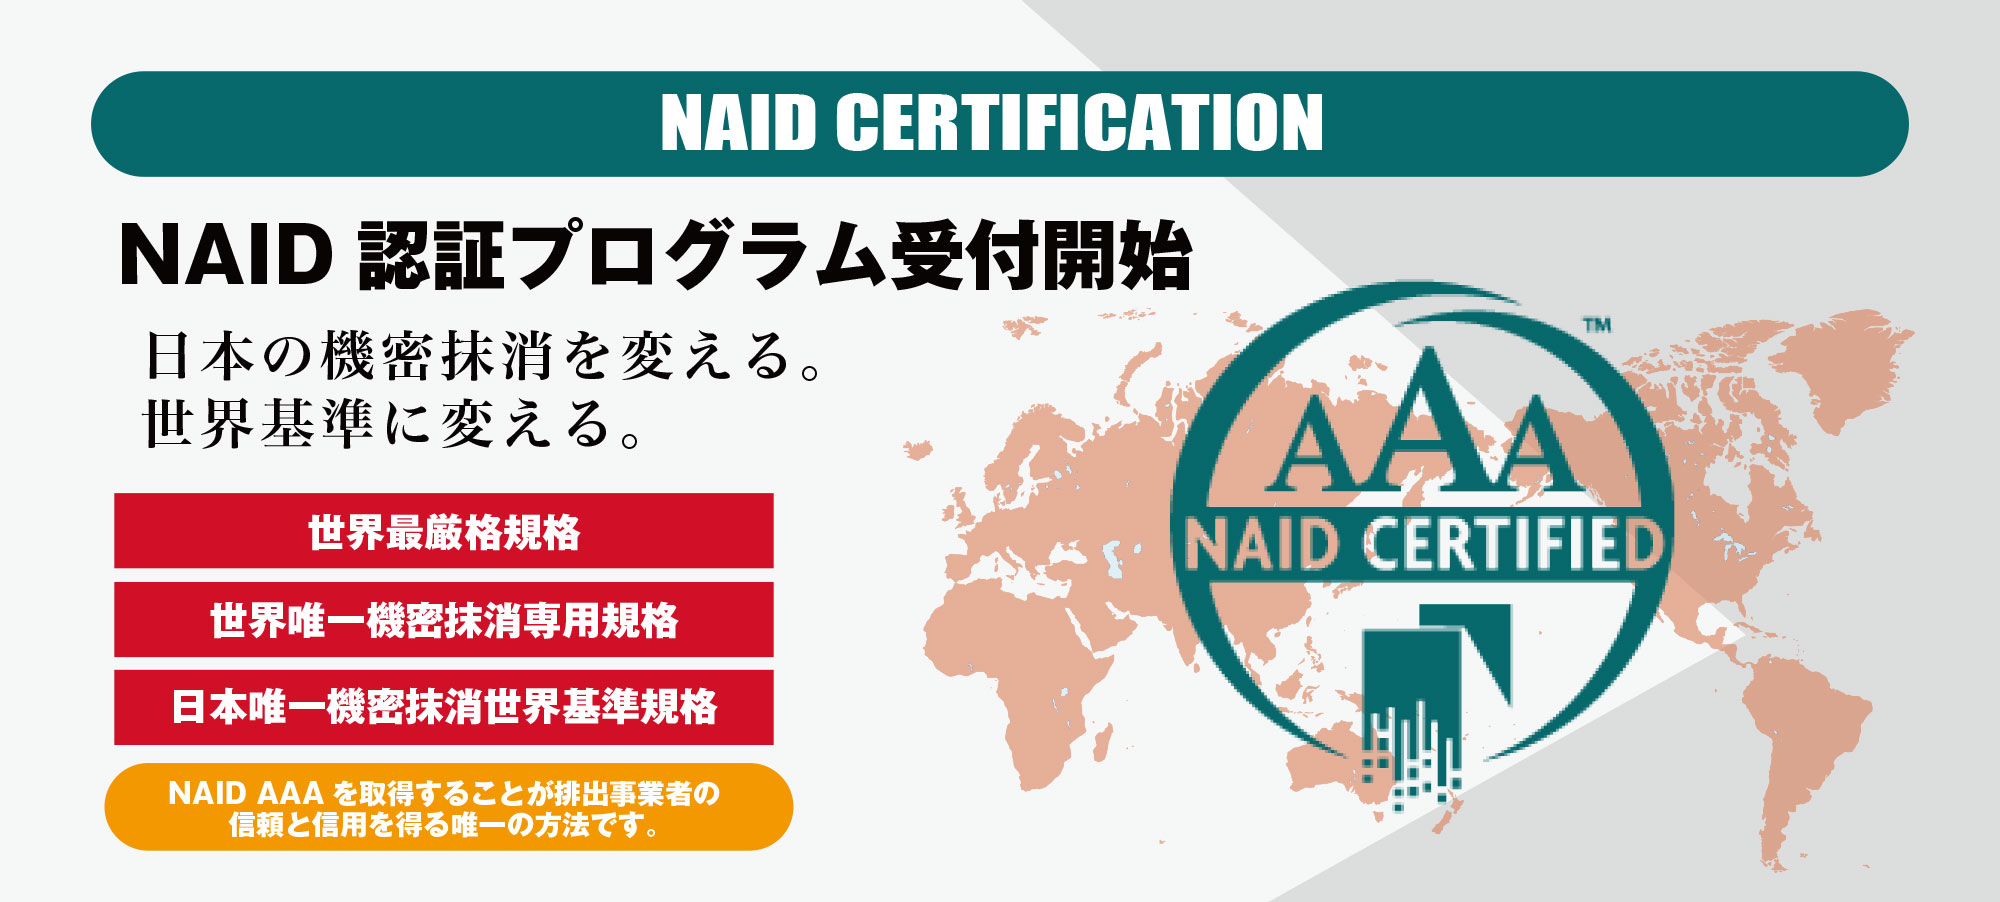 NAID認証プログラム受付開始